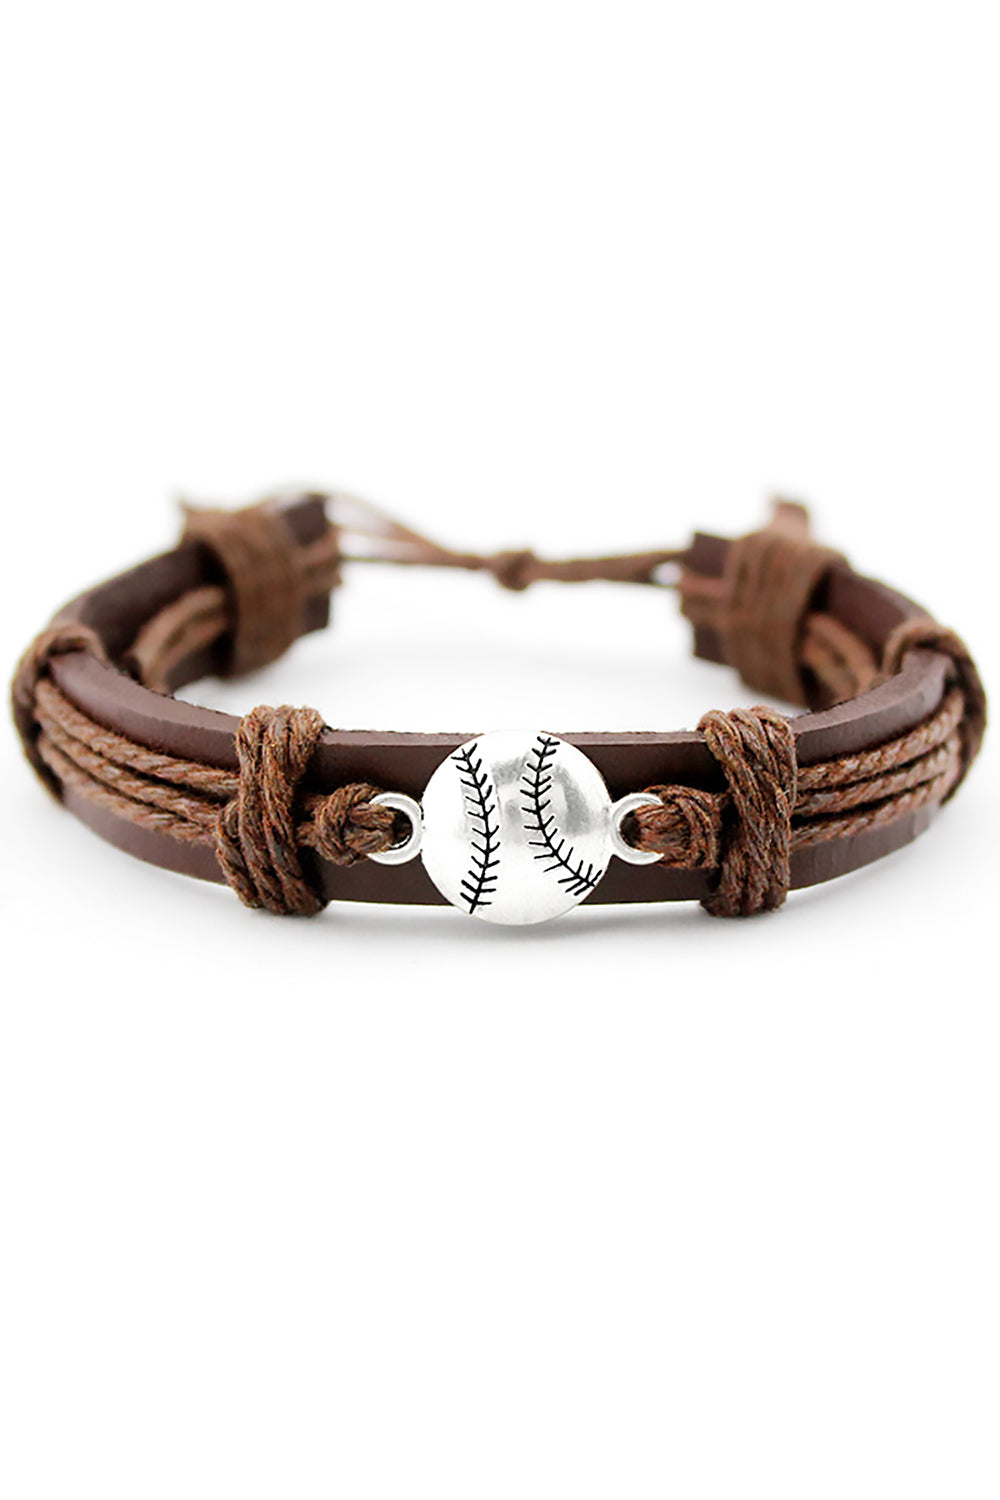 Baseball Braided Leather Cord Bracelet